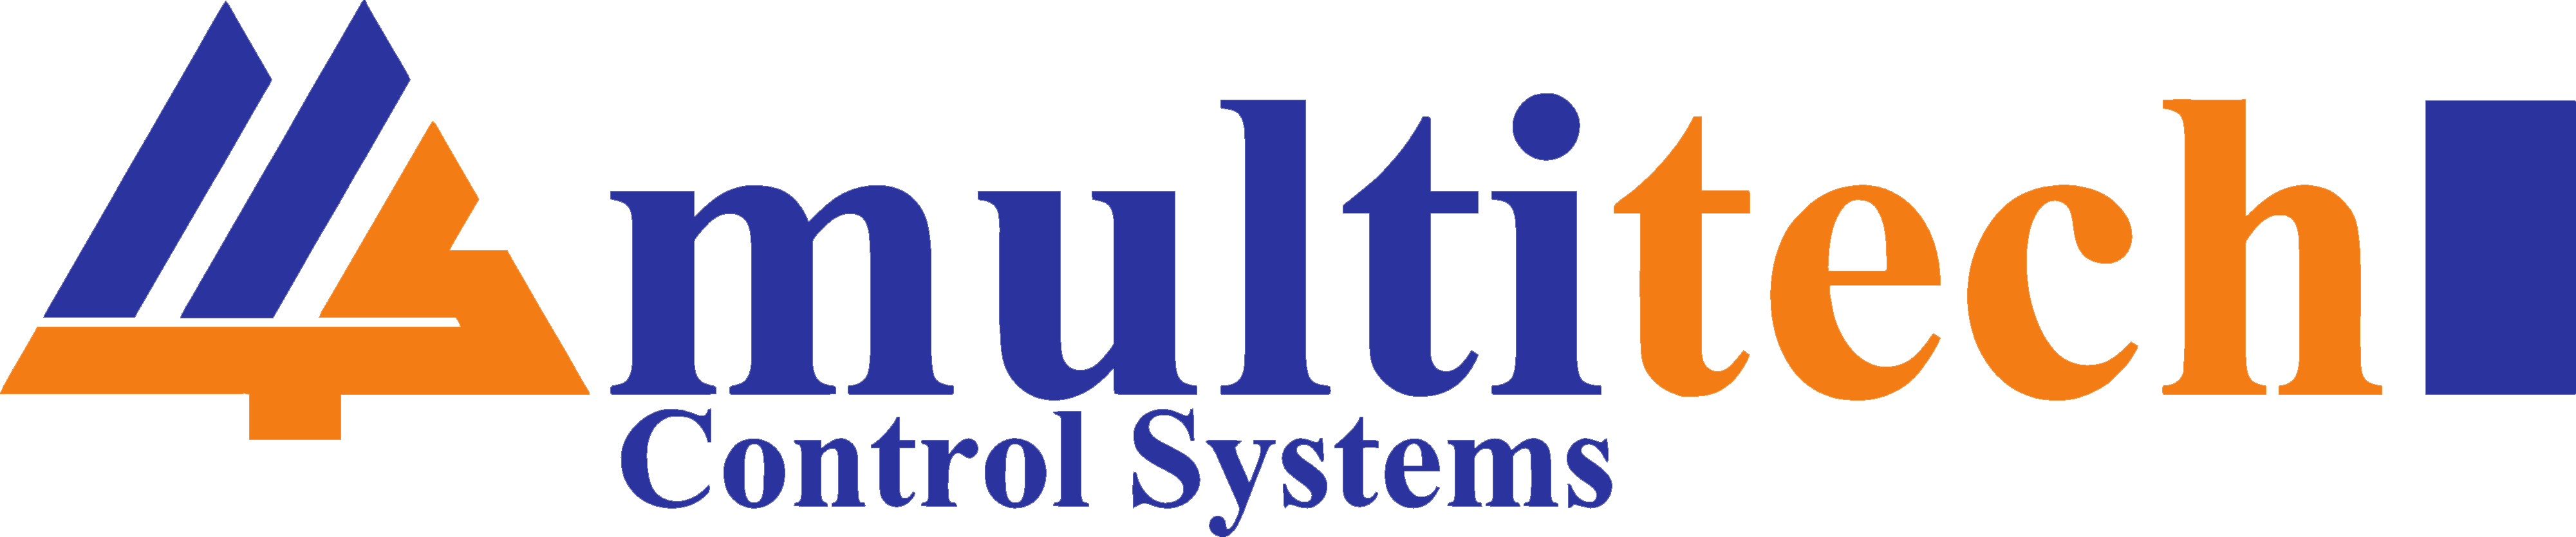 Multitech Logo - Multitech Control Systems | Solution We Provide